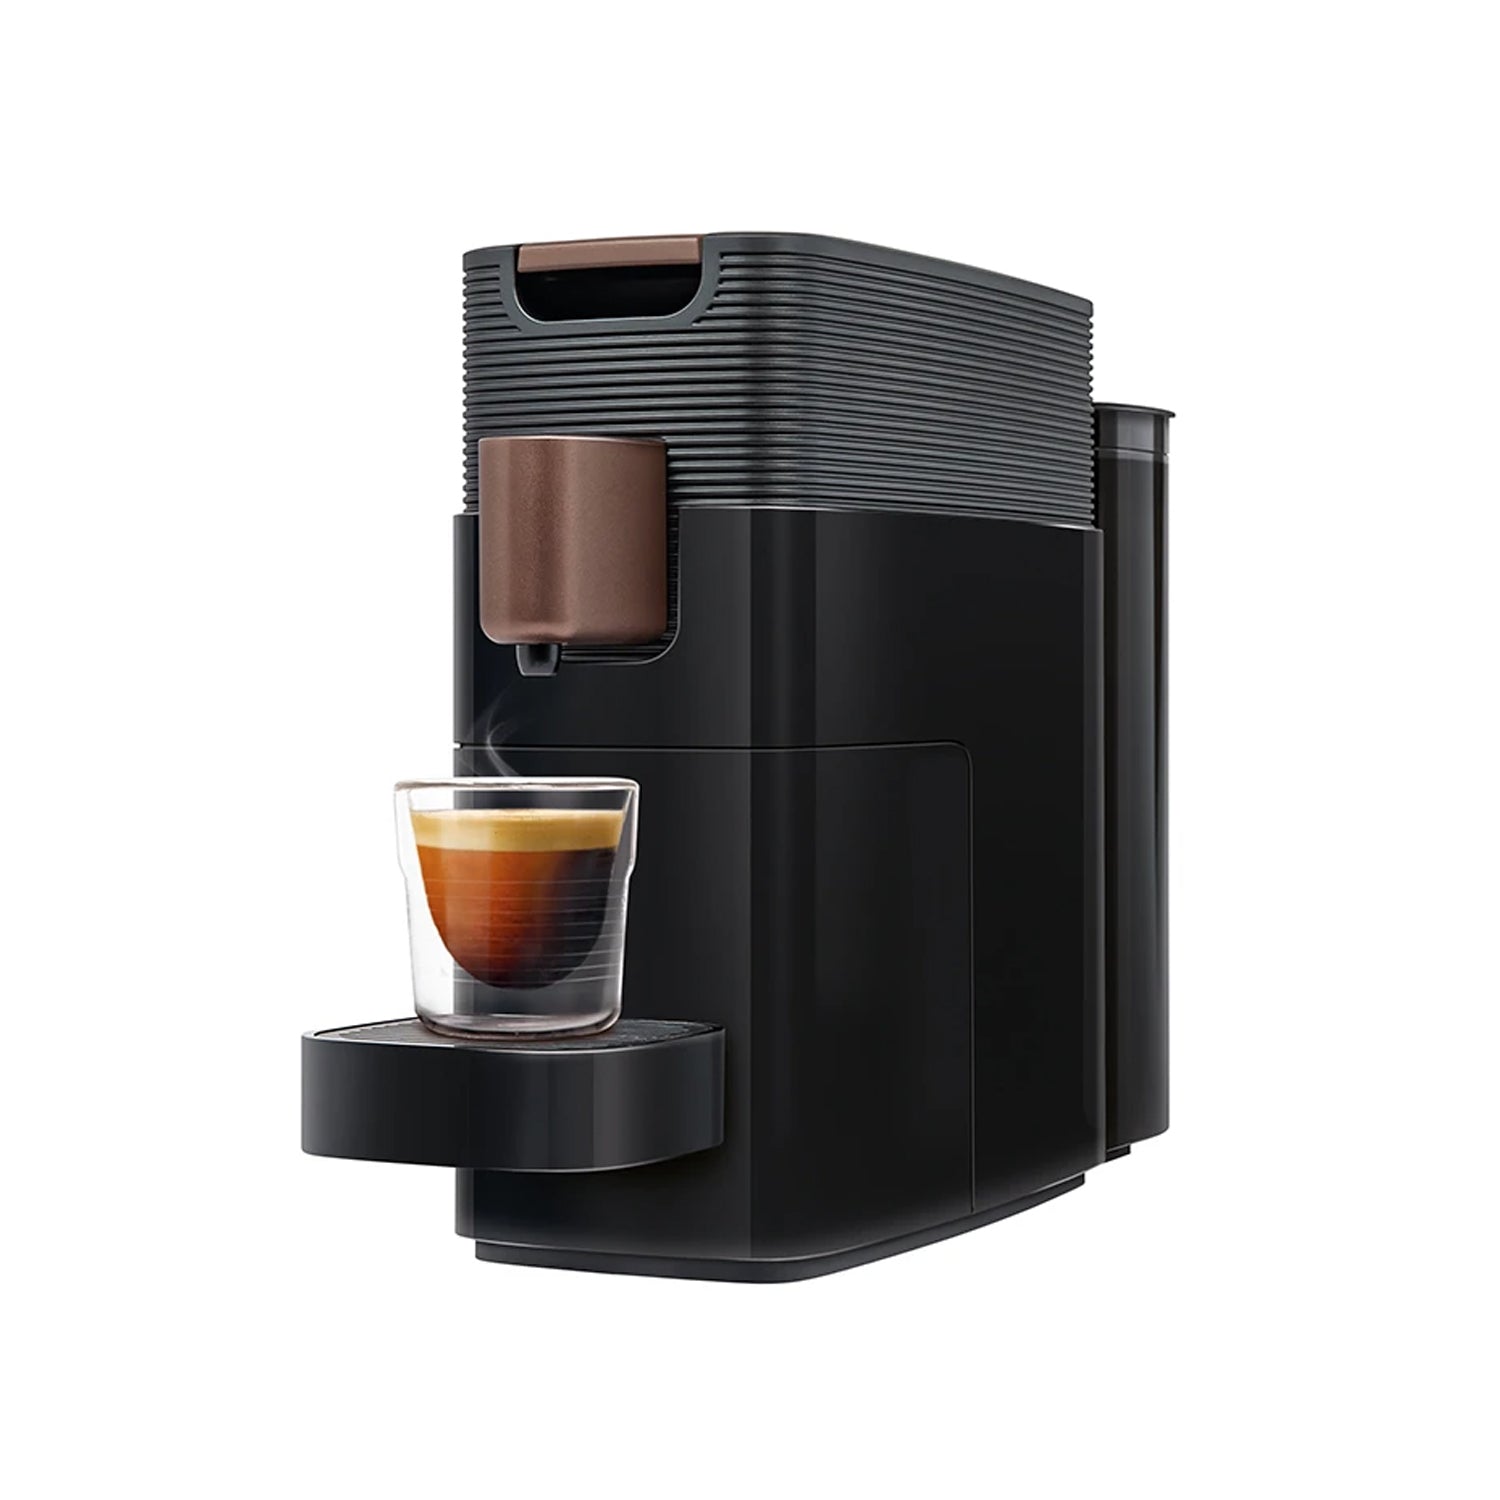 K-fee® Single Serve Coffee & Espresso Brewers – K-fee USA